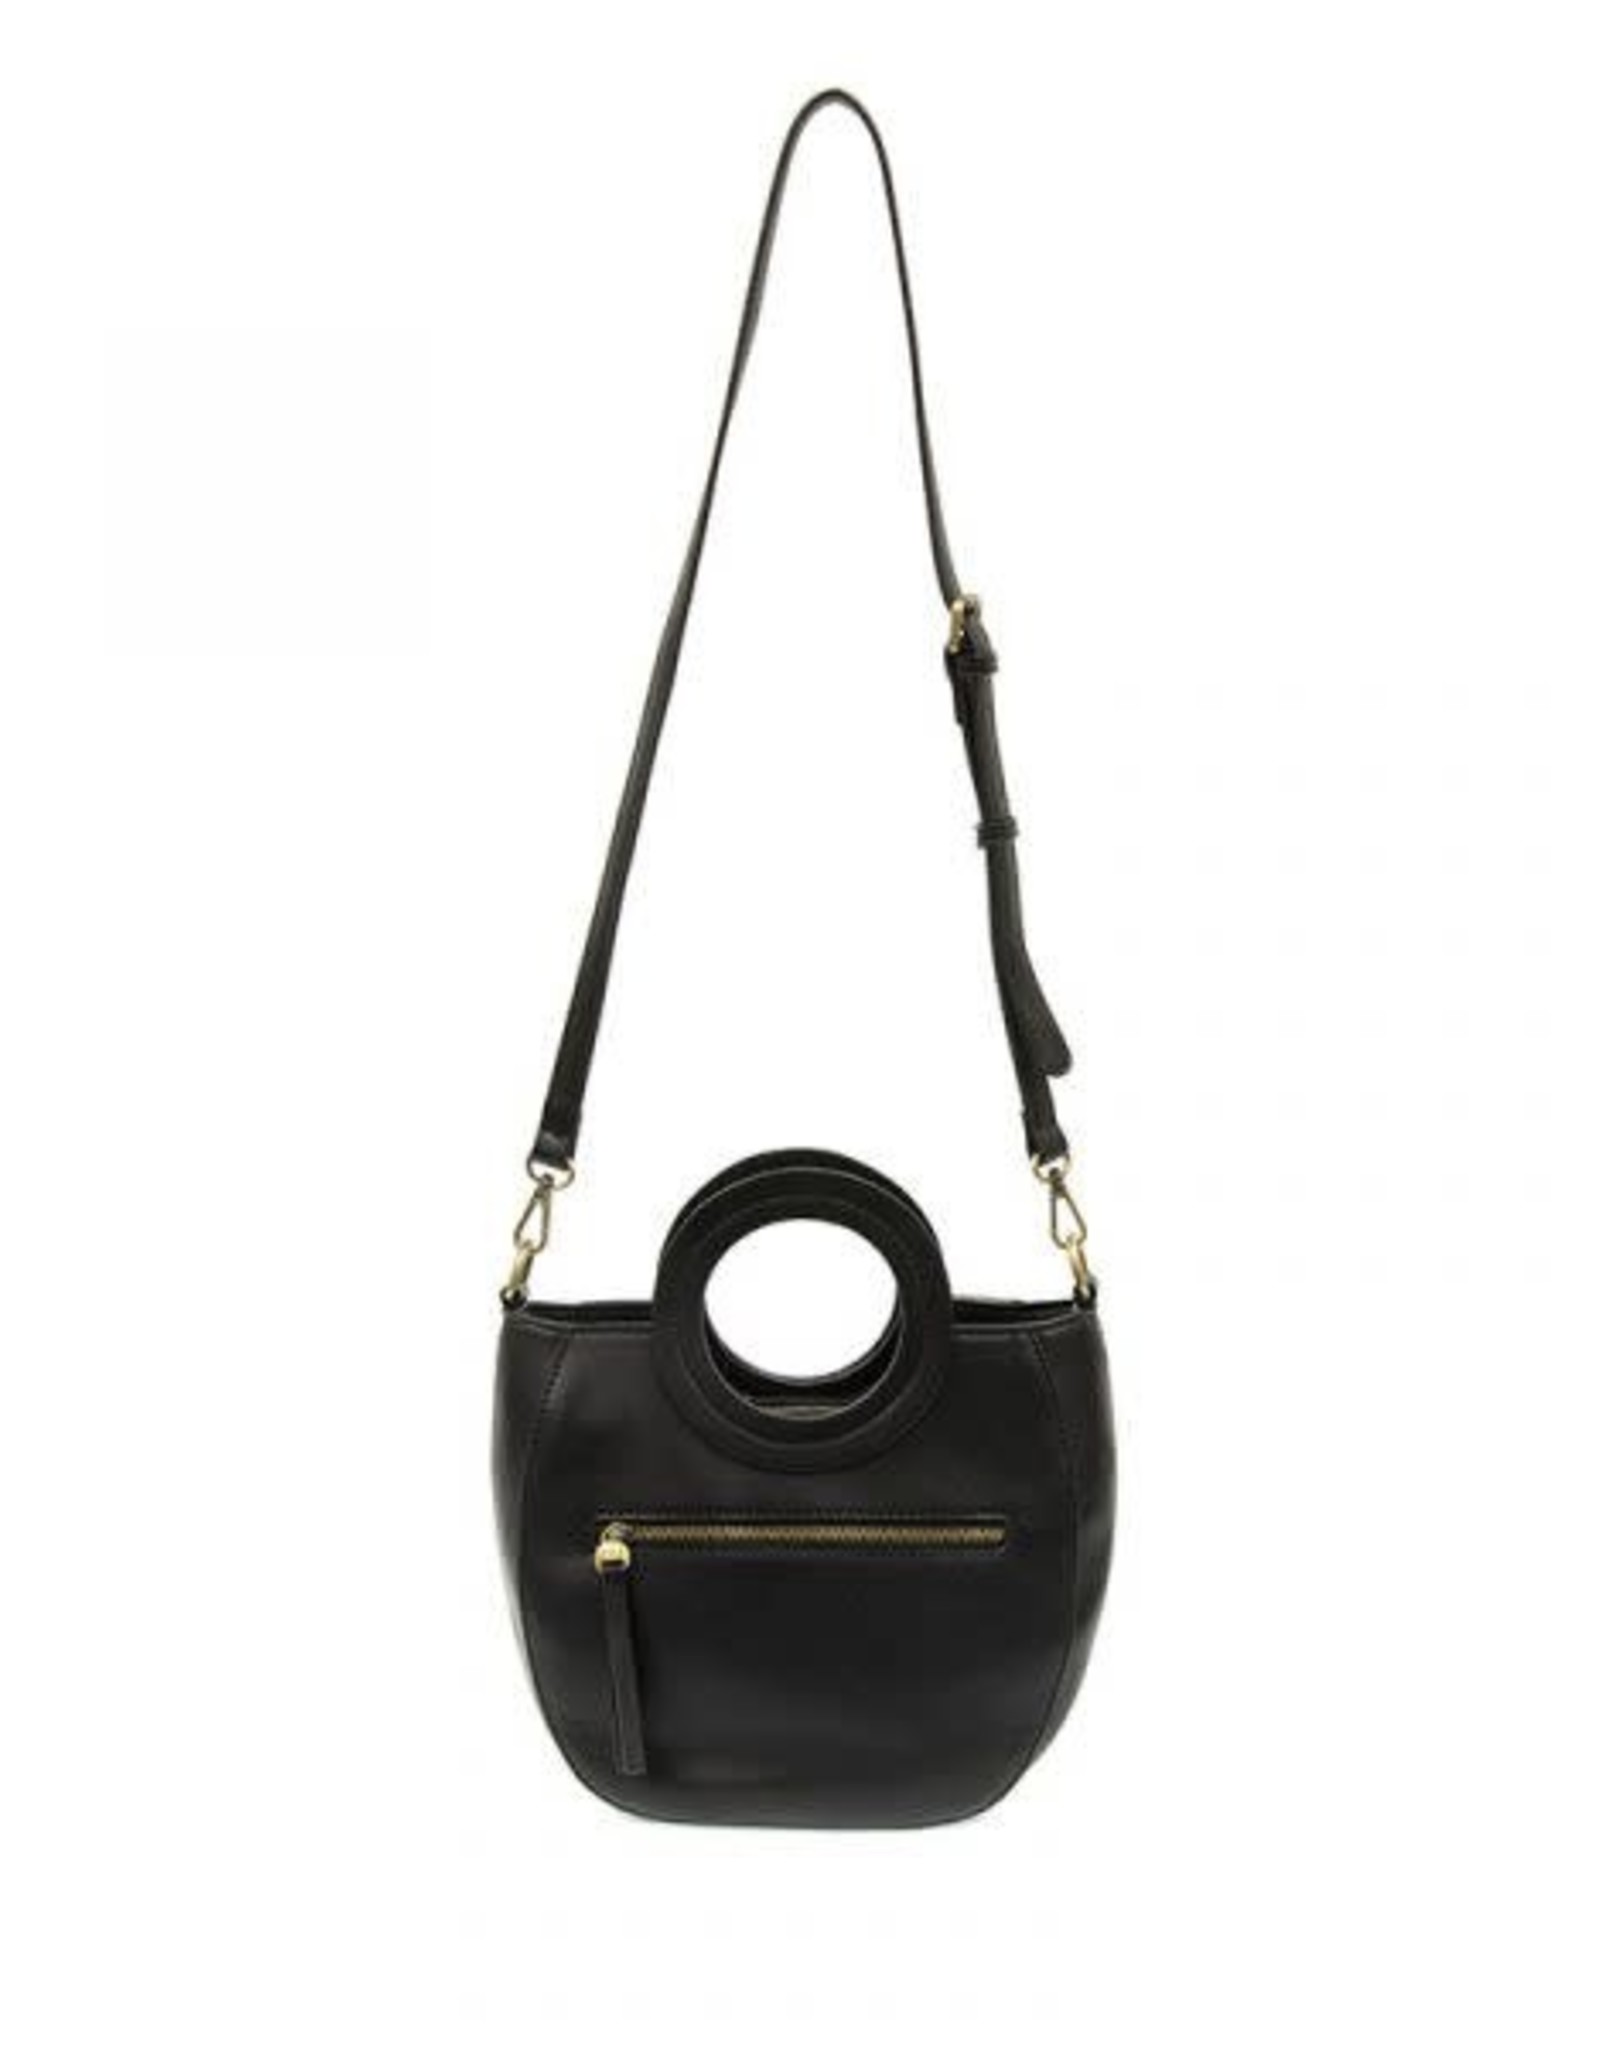 - Black Circle Handle Handbag